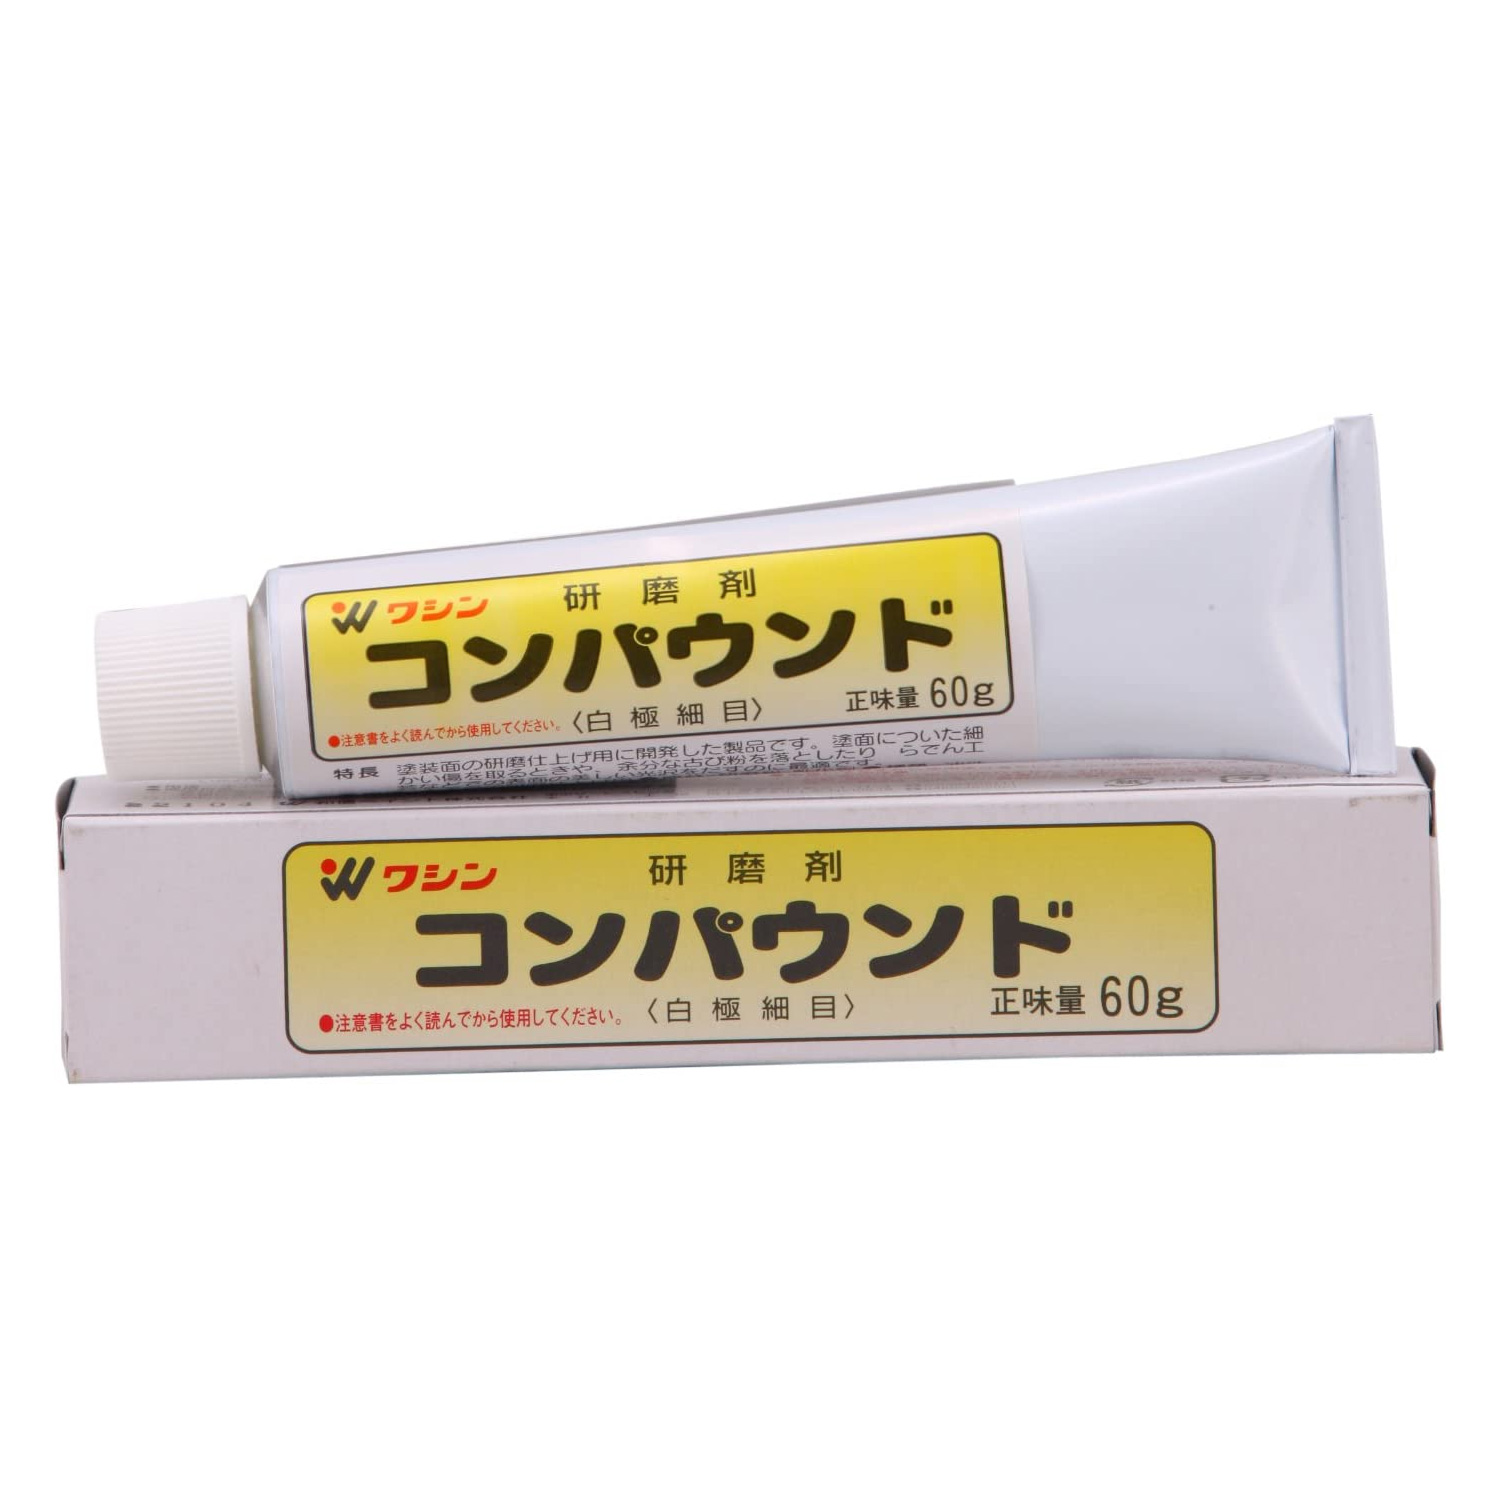 UV-COP Polishing Paste Compound 60g (pcs)